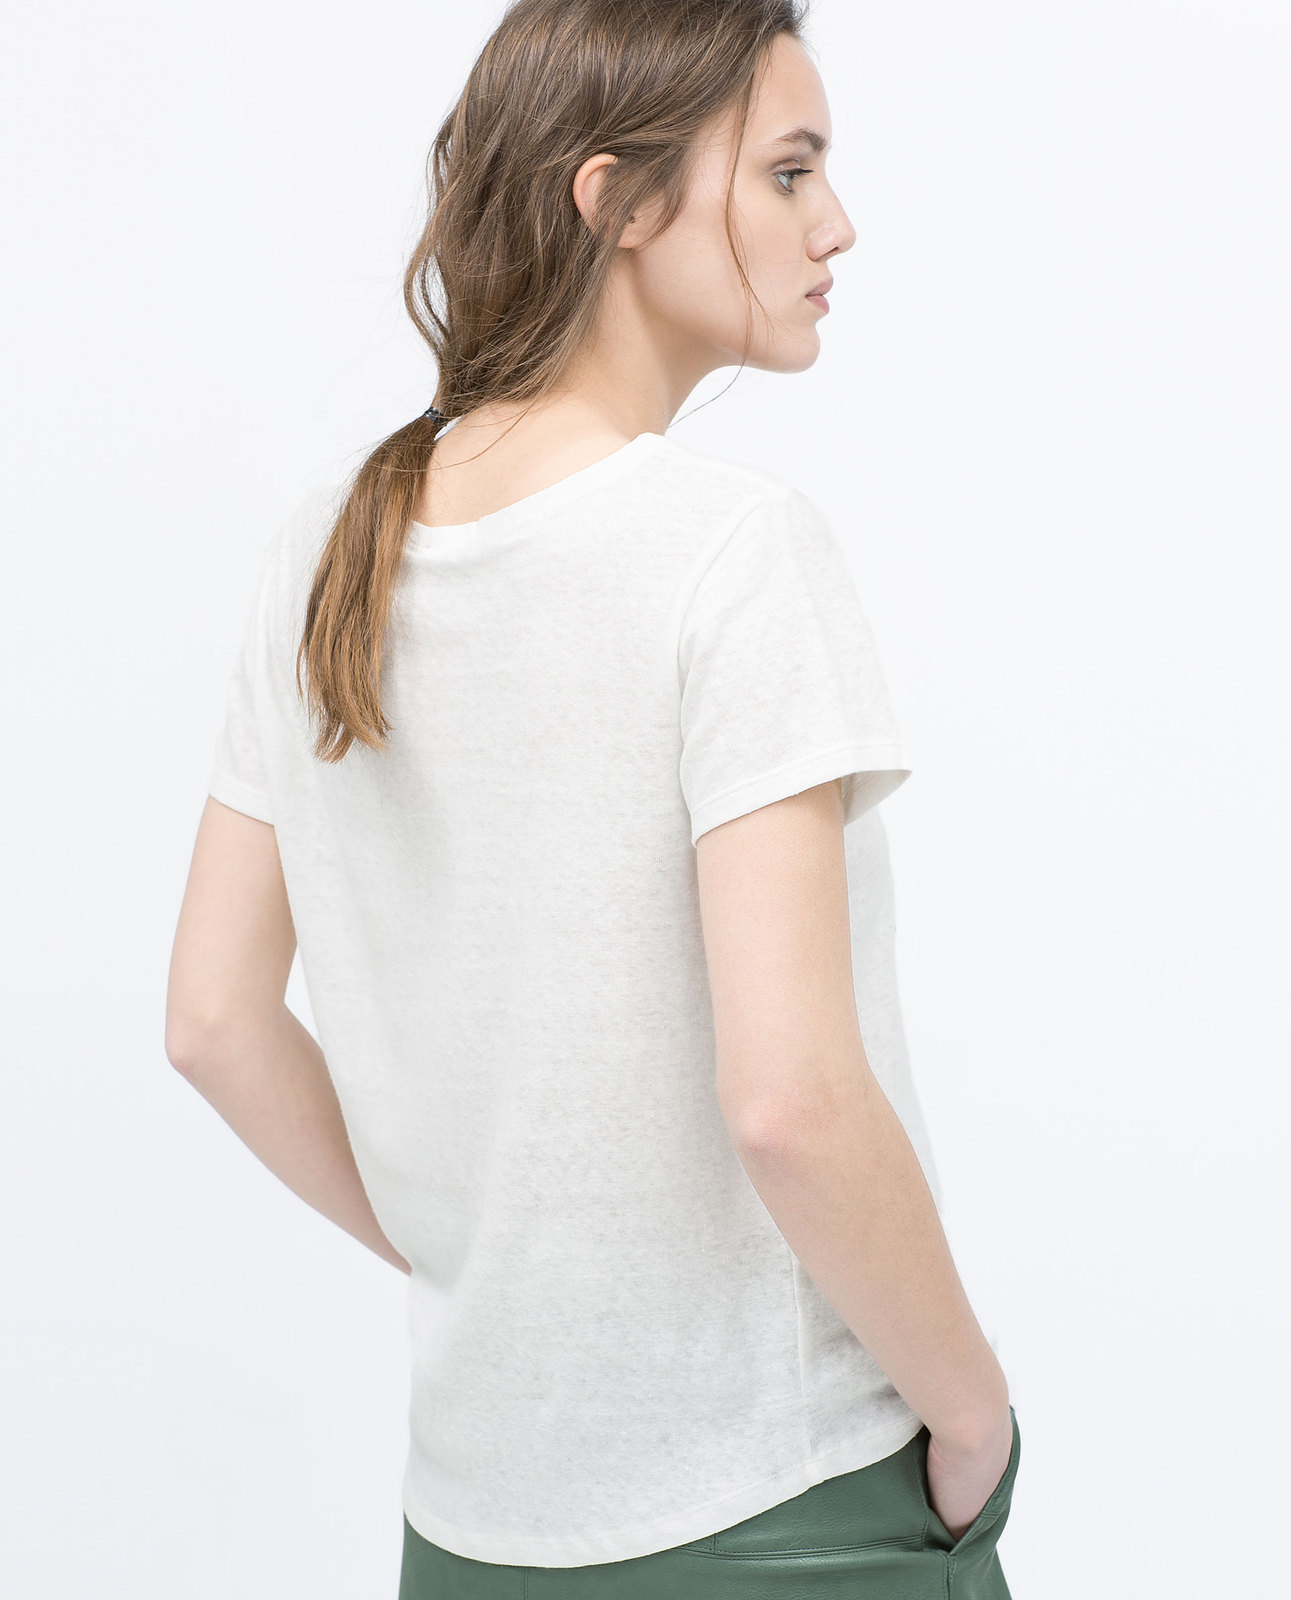 Zara csillagos fehér T-shirt 2015.02.23 #74913 fotója